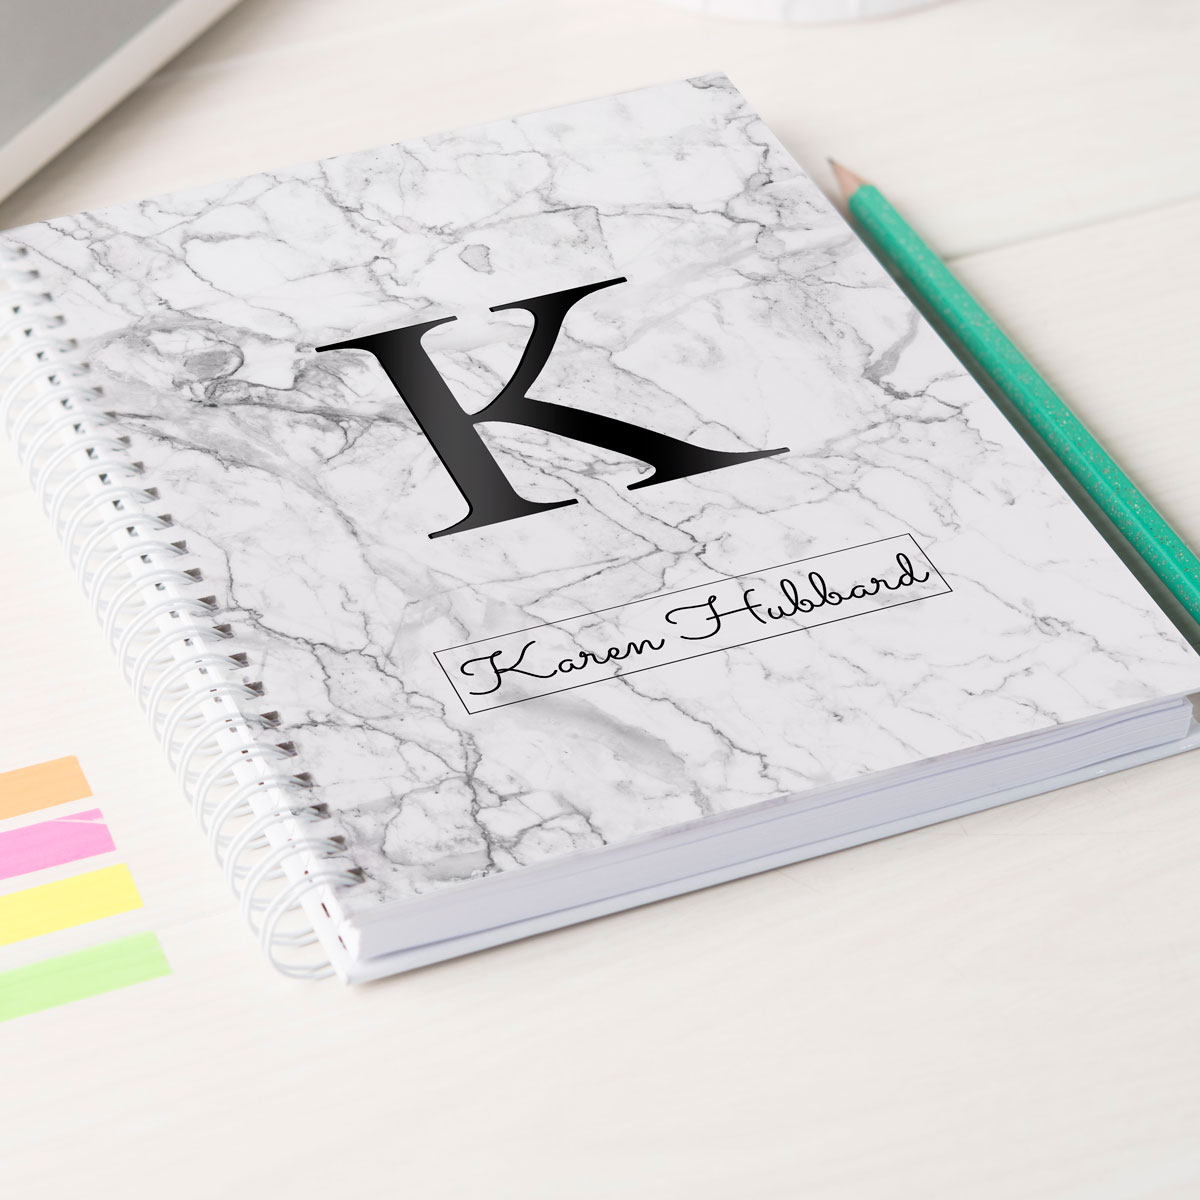 Personalised Notebook - Marble Initial